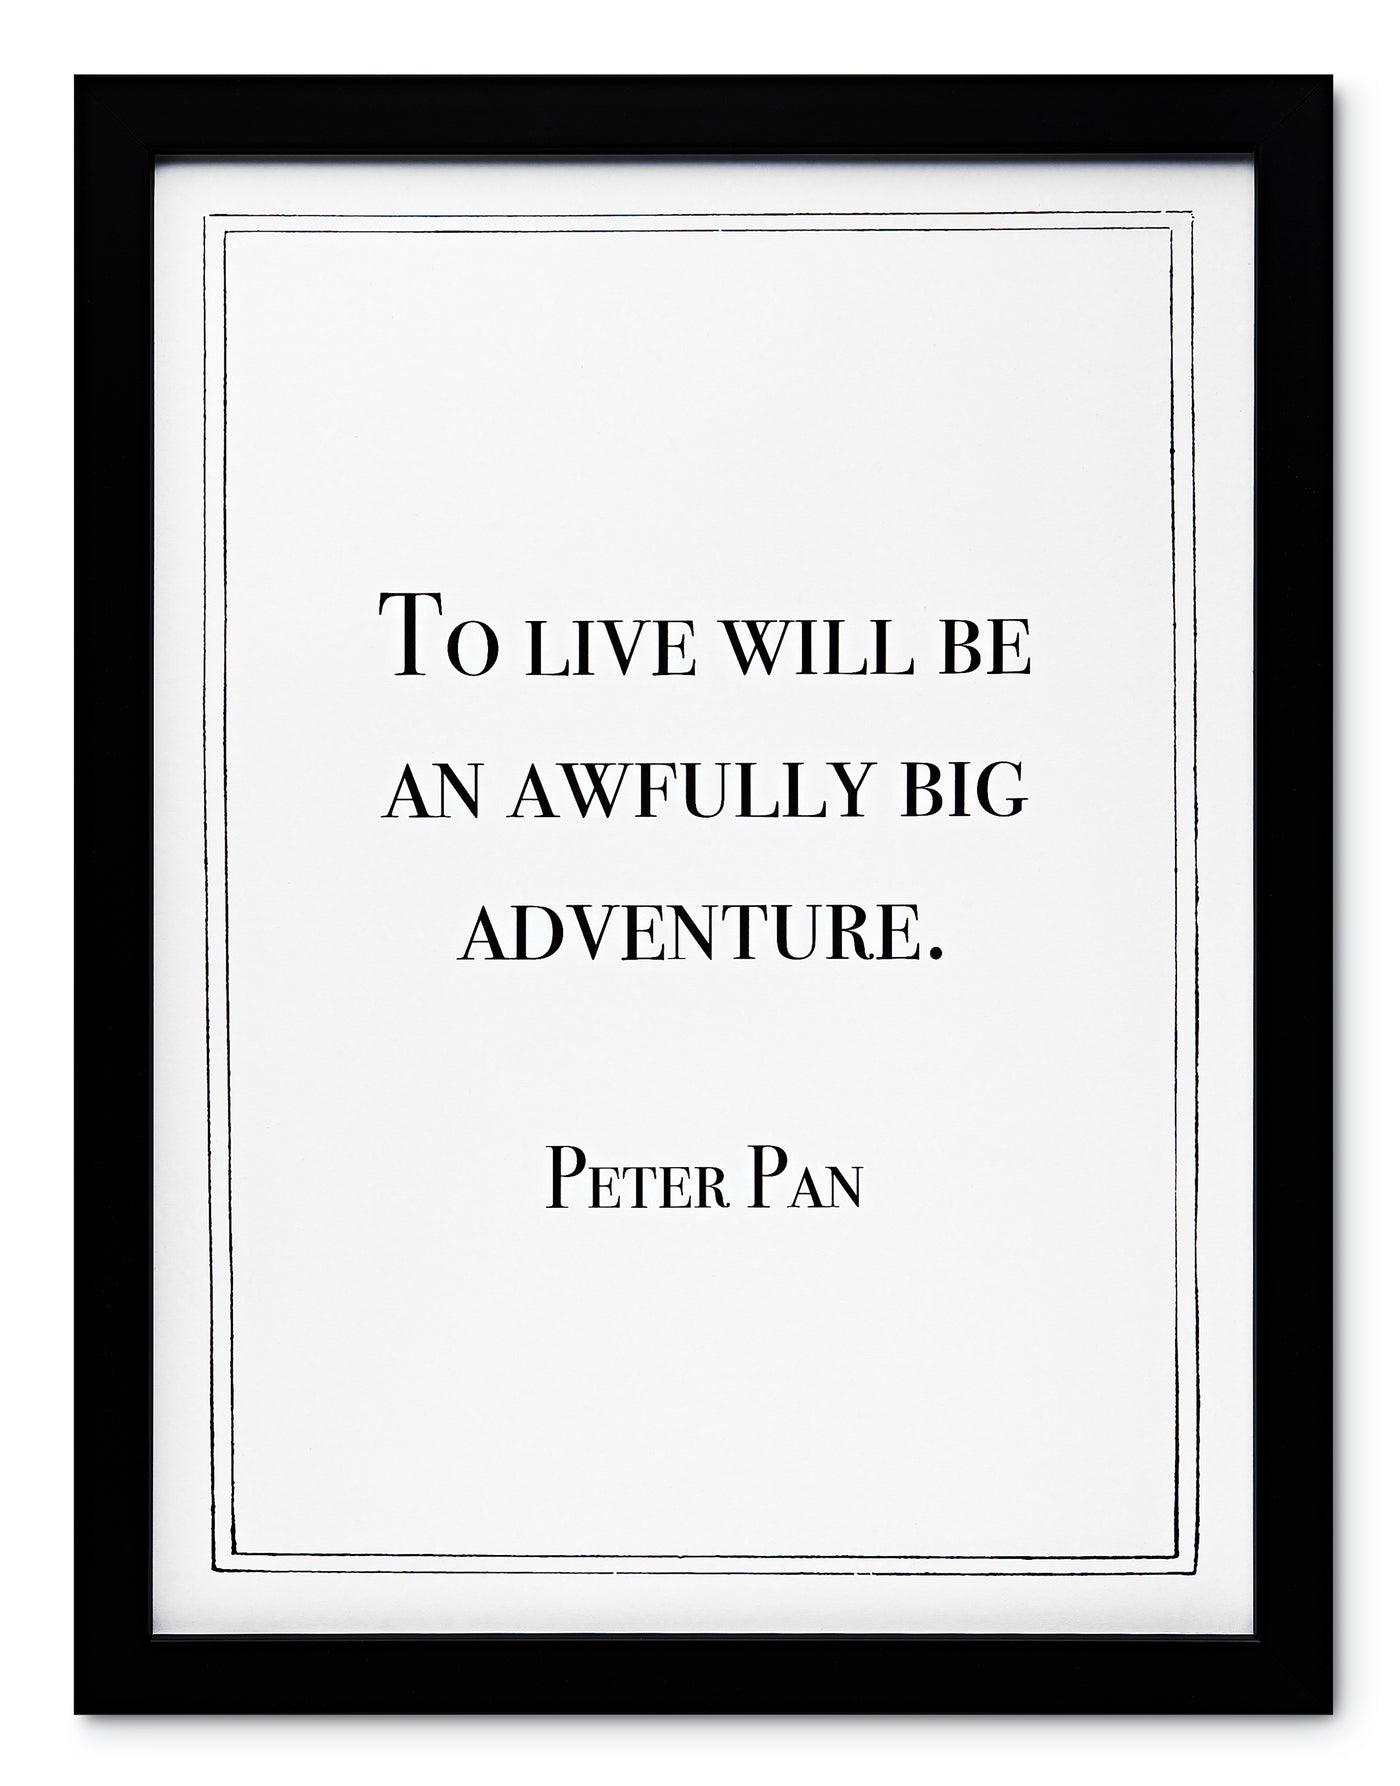 Peter Pan's Wisdom